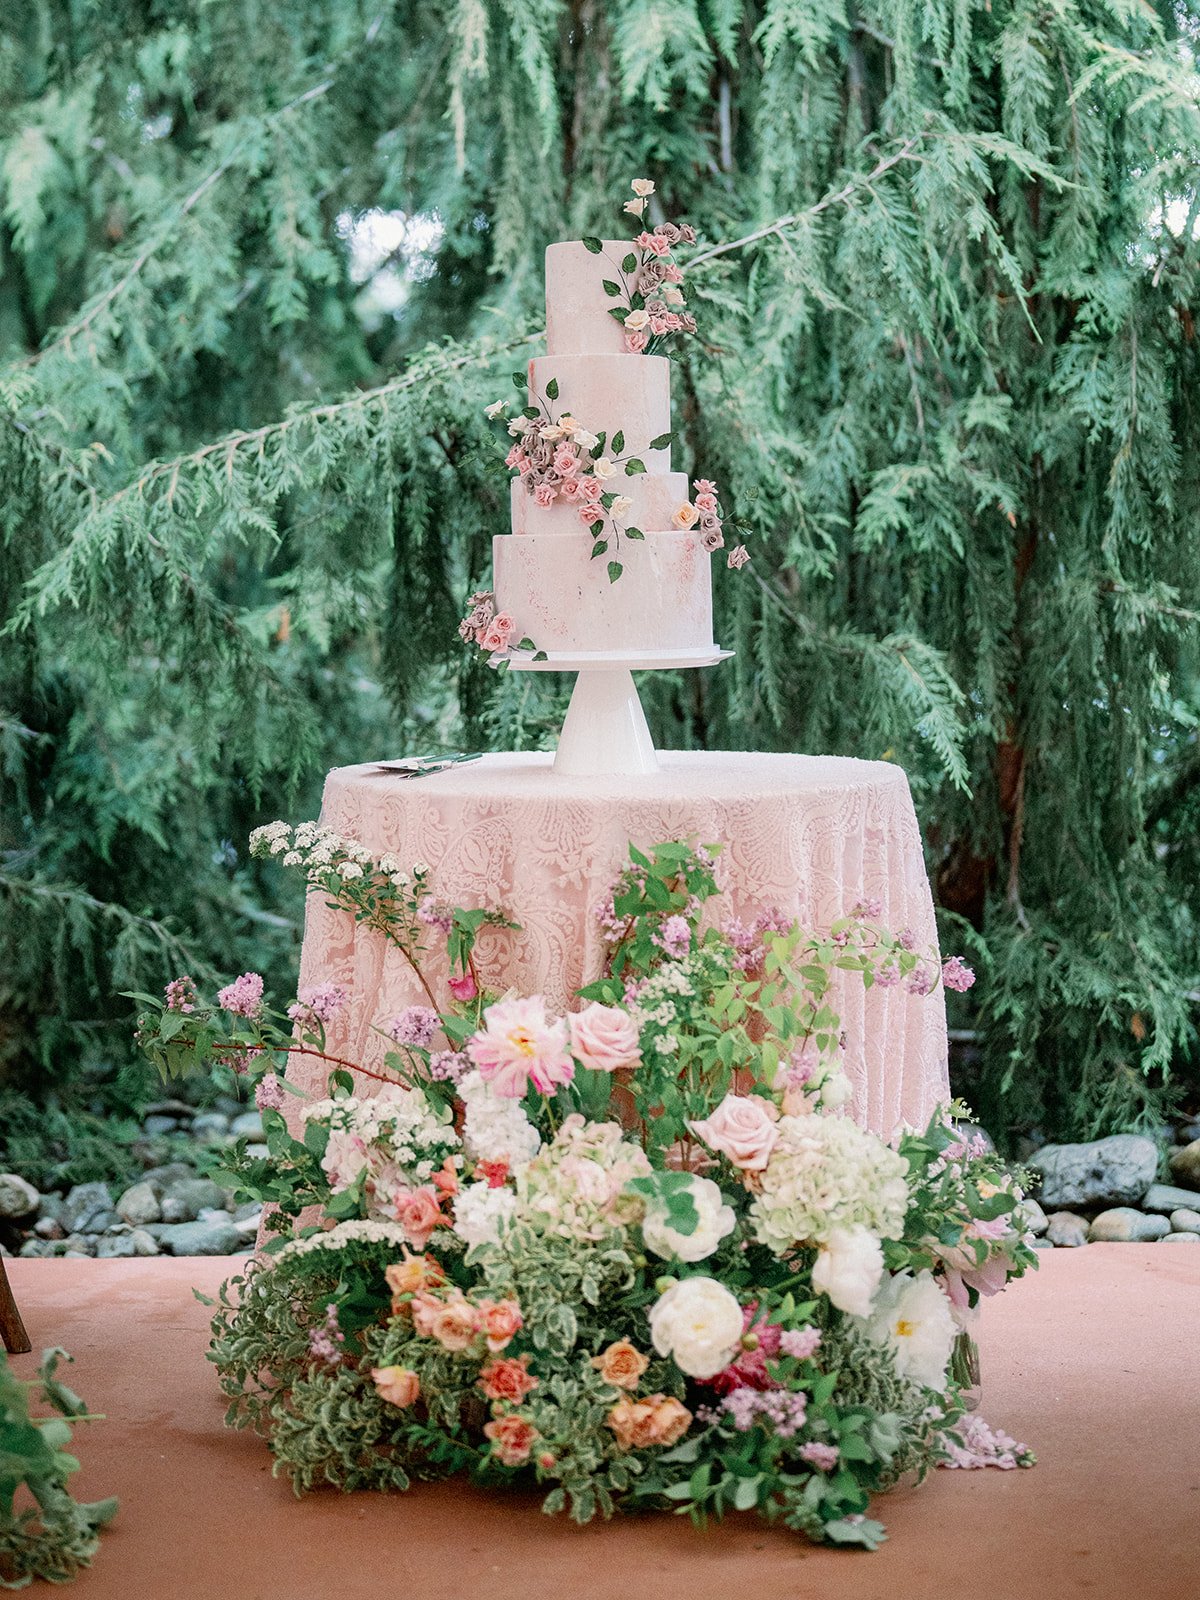 White Wedding Cake with blush flowers